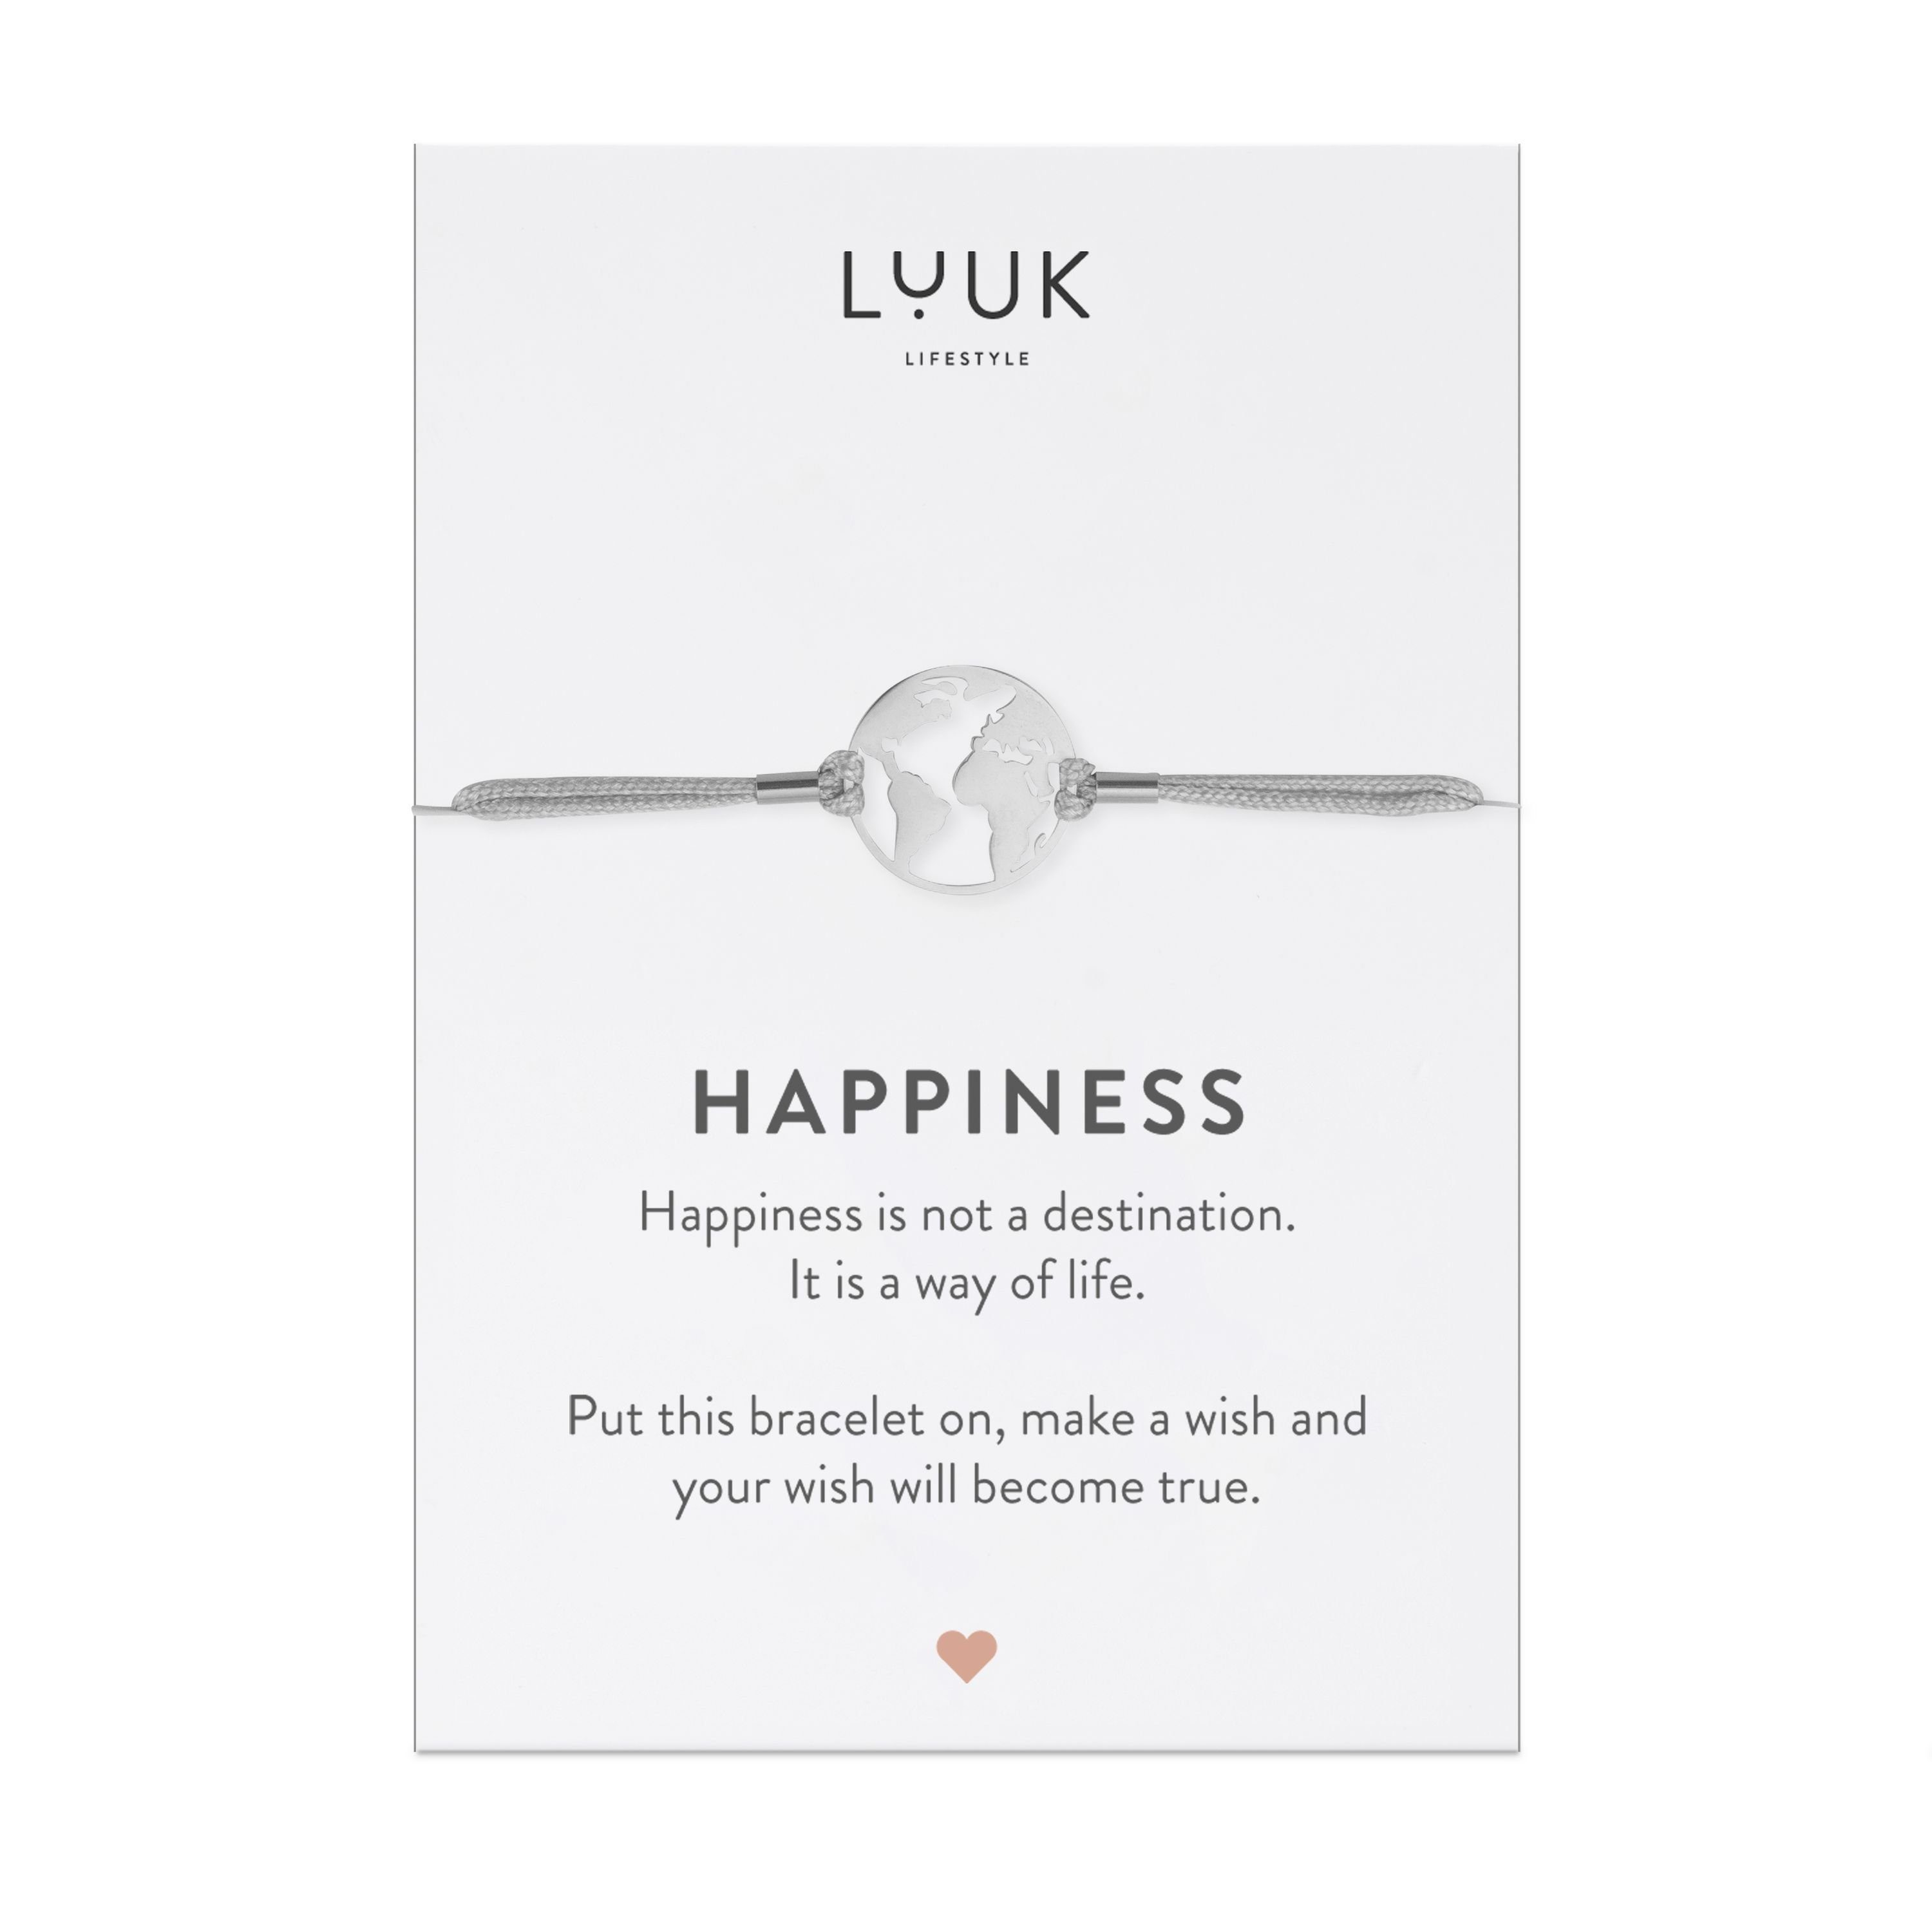 LUUK LIFESTYLE Freundschaftsarmband Weltkugel, handmade, mit Happiness Spruchkarte Silber